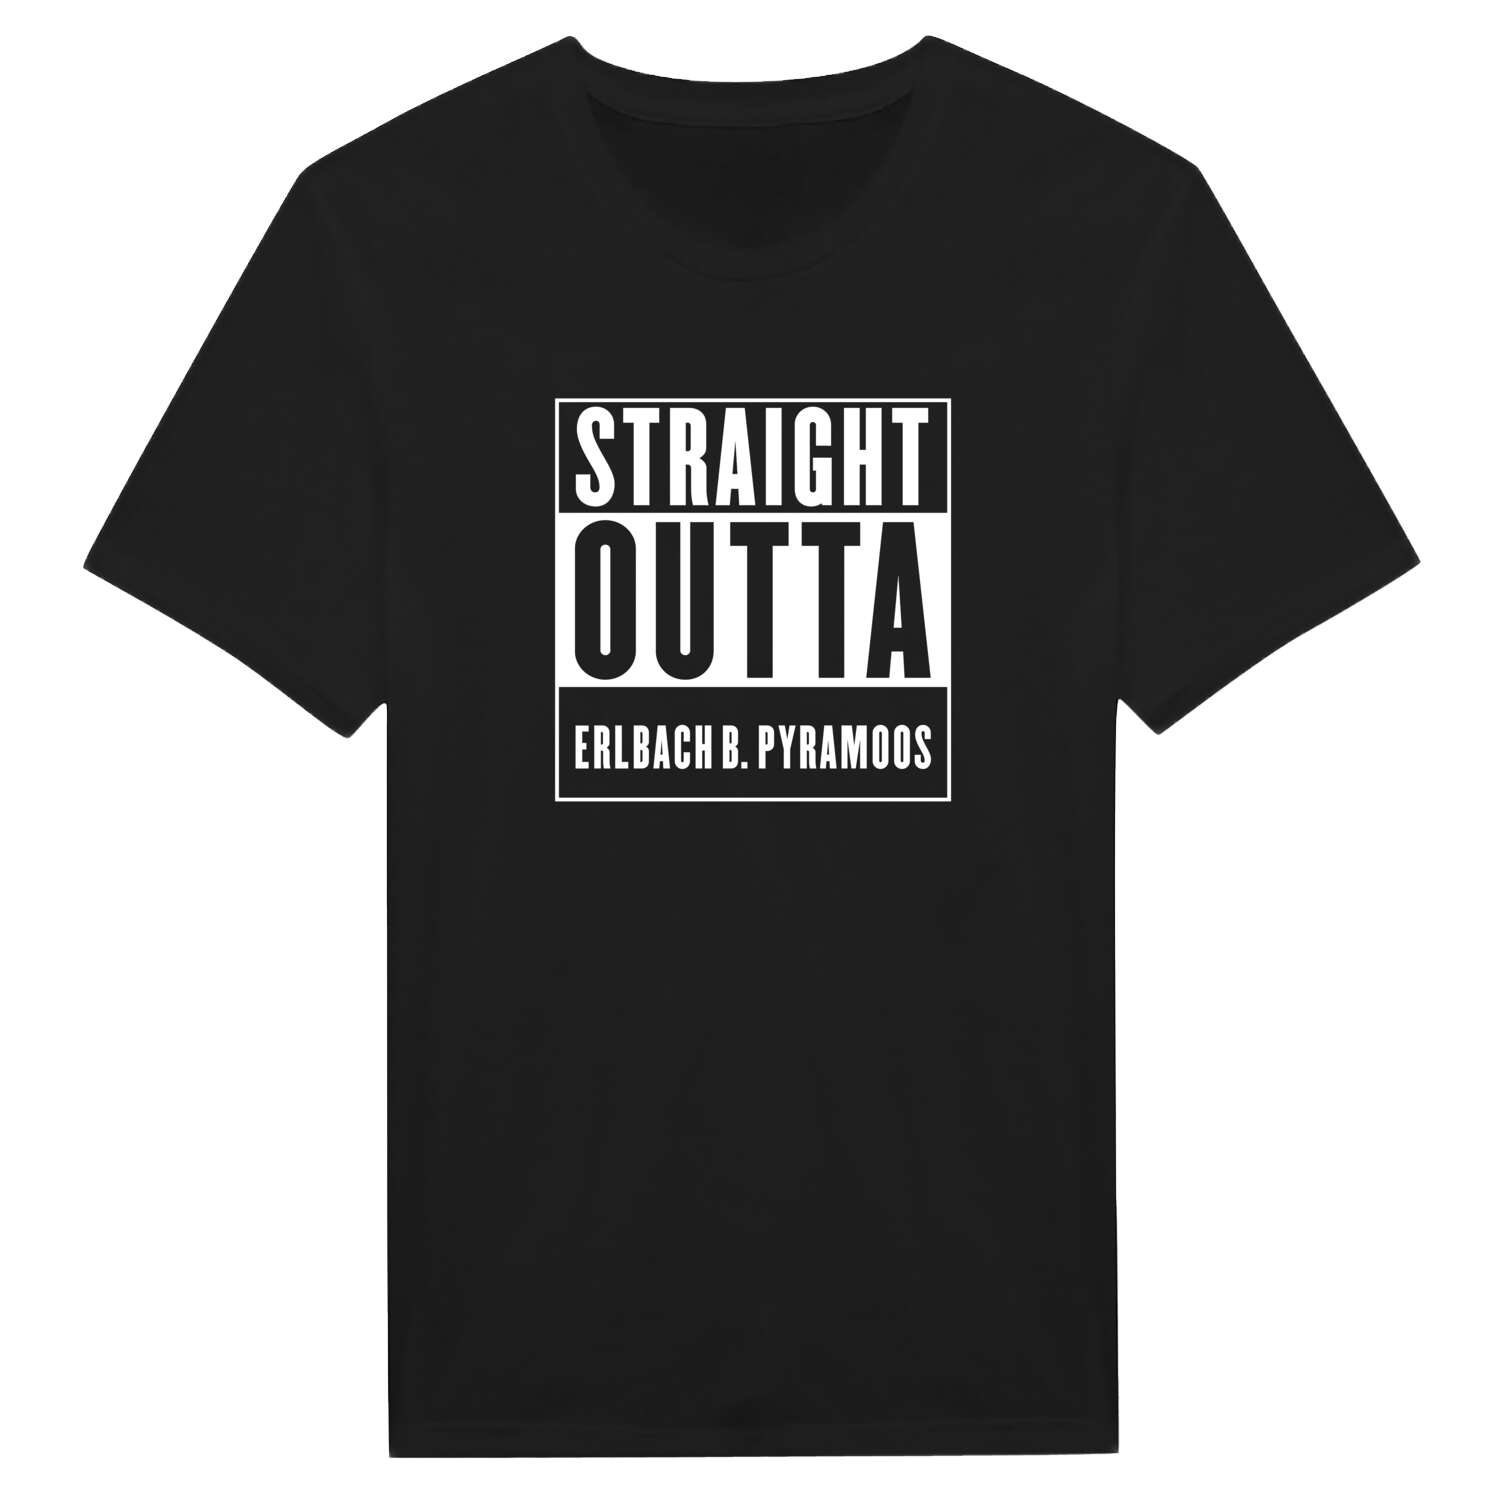 Erlbach b. Pyramoos T-Shirt »Straight Outta«